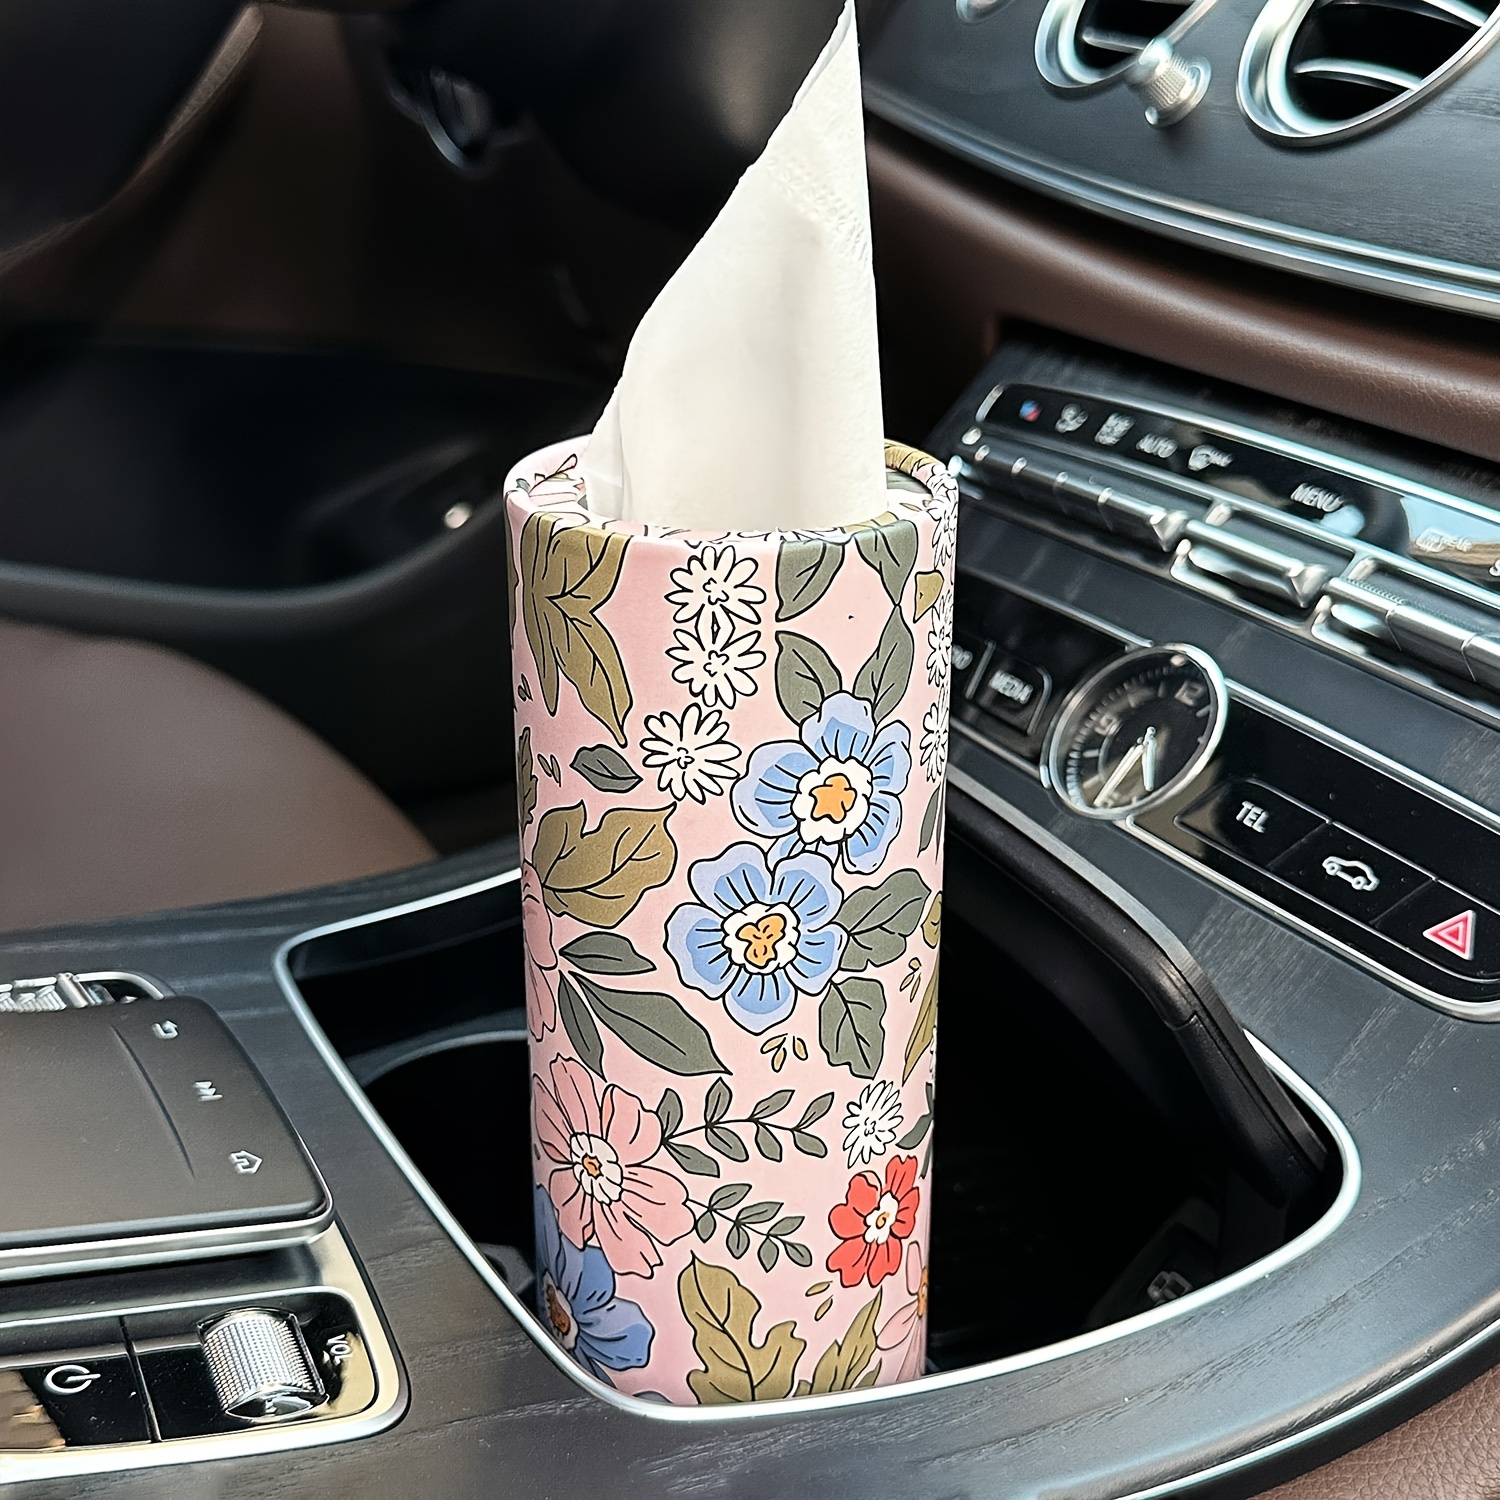 Car Tissue Round Box Car Tissues Cylinder Tissues for Car Cup Tissue Holder  Travel Tissues Dispenser Tissue Paper for Car Facial Tissue Tube Refills  Tissue Cani…